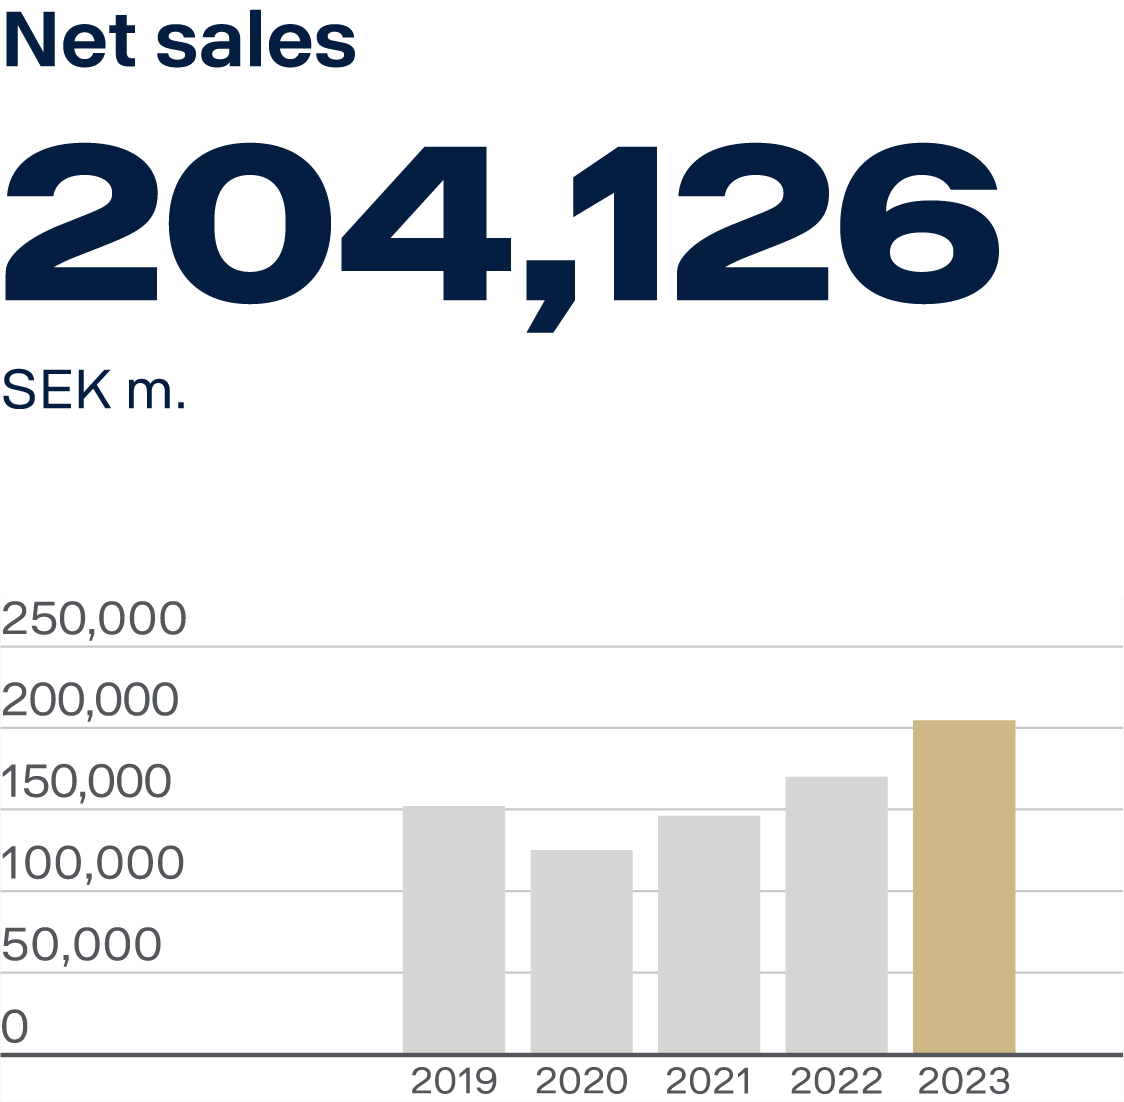 Scania´s Net sales